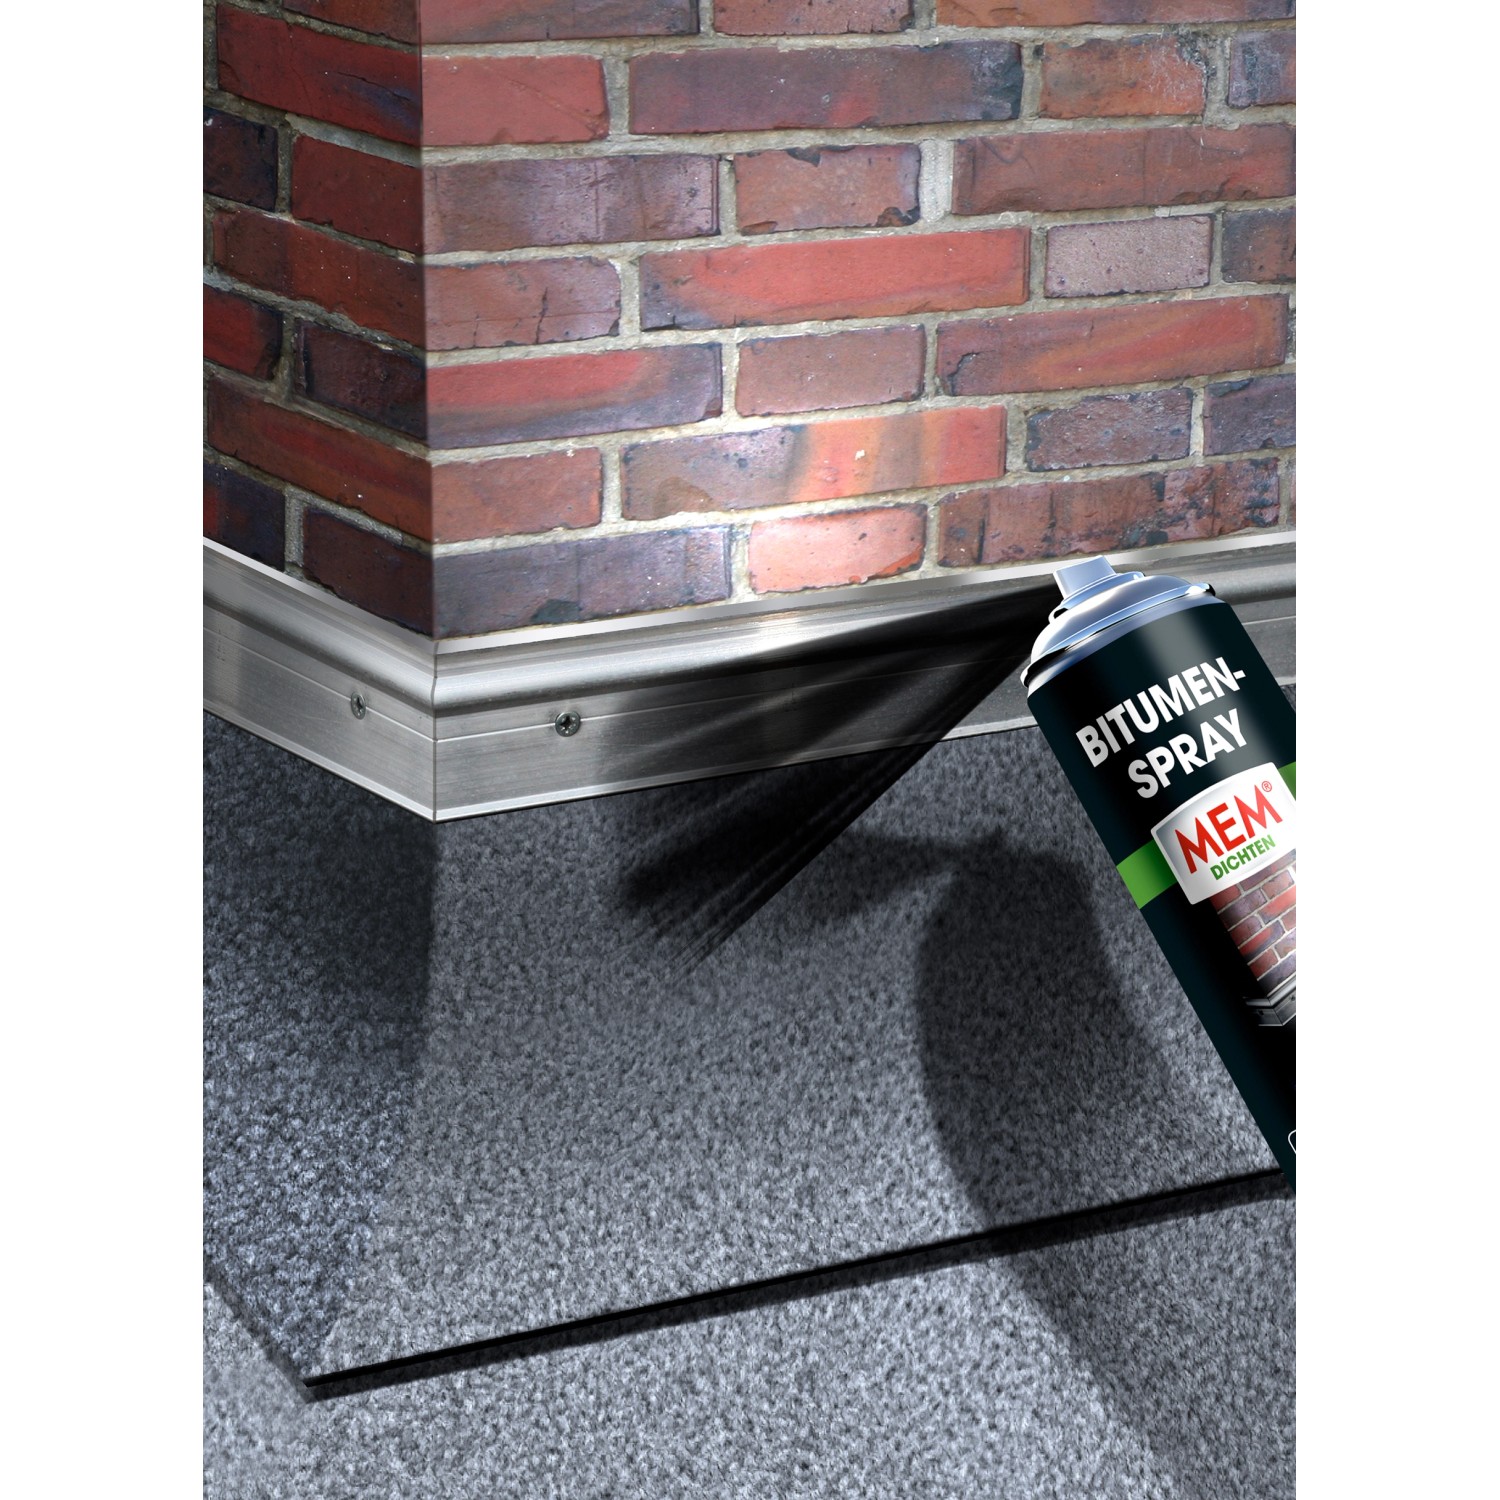  MEM bitumen spray 500 ml small repairs in the roof  area No. 30610949 sealing spray